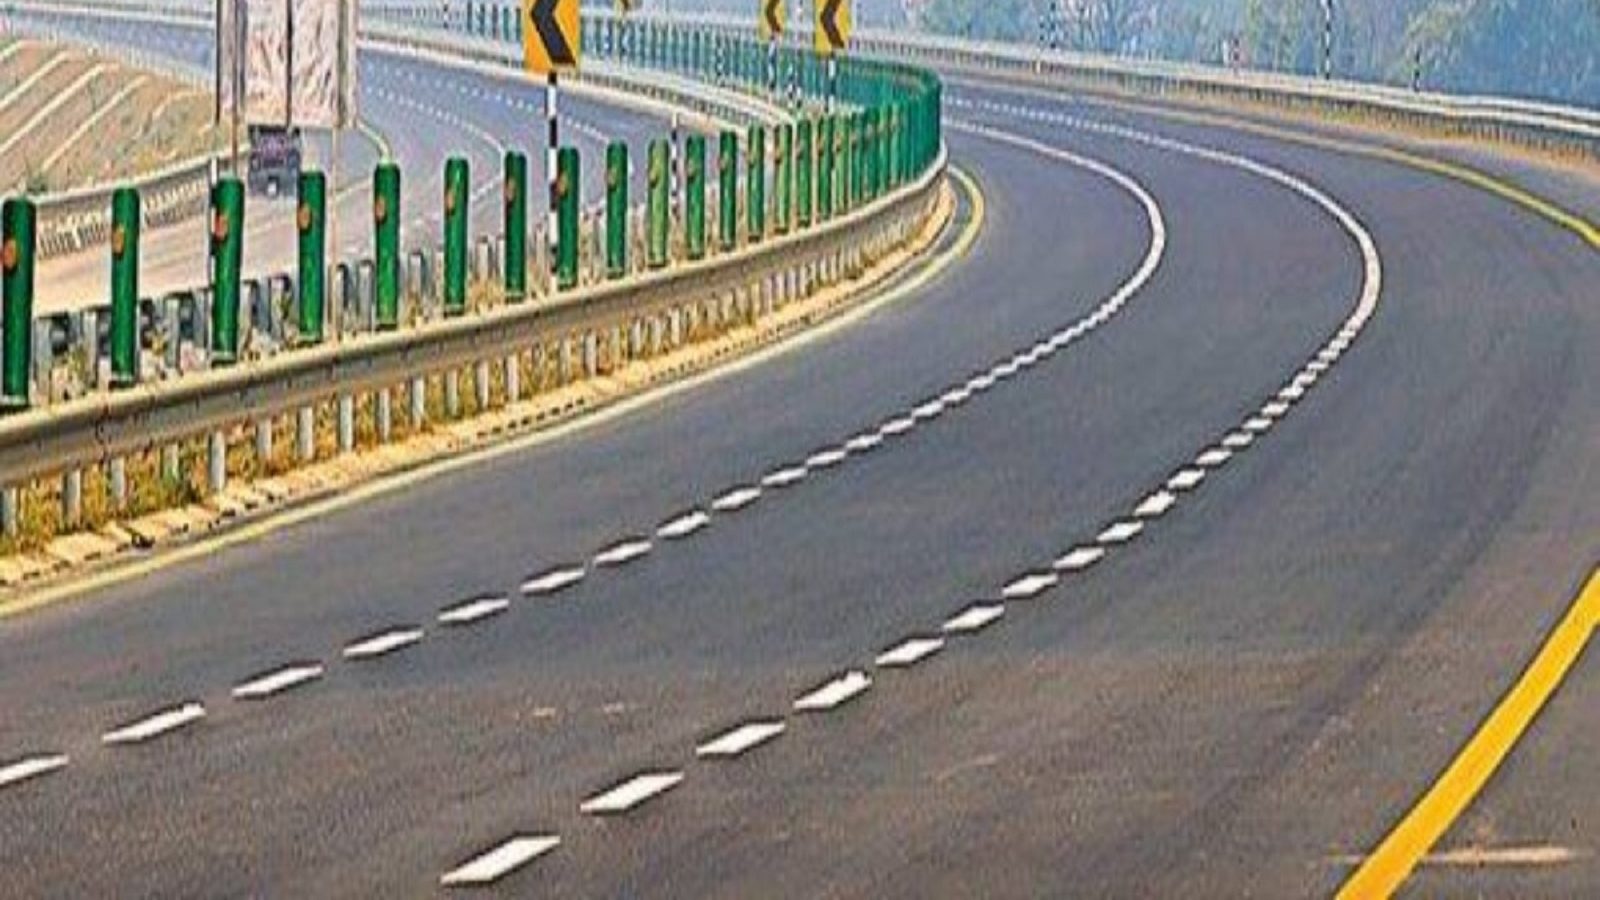 patna Kolkata Expressway complete plan will pass through 5 districts  bakhtiyarpur biharsharif jamui sheikhpura go through Baba Dham brvj -  पटना-कोलकाता एक्सप्रेसवे का पूरा प्लान: बिहार के इन 5 जिलों से ...